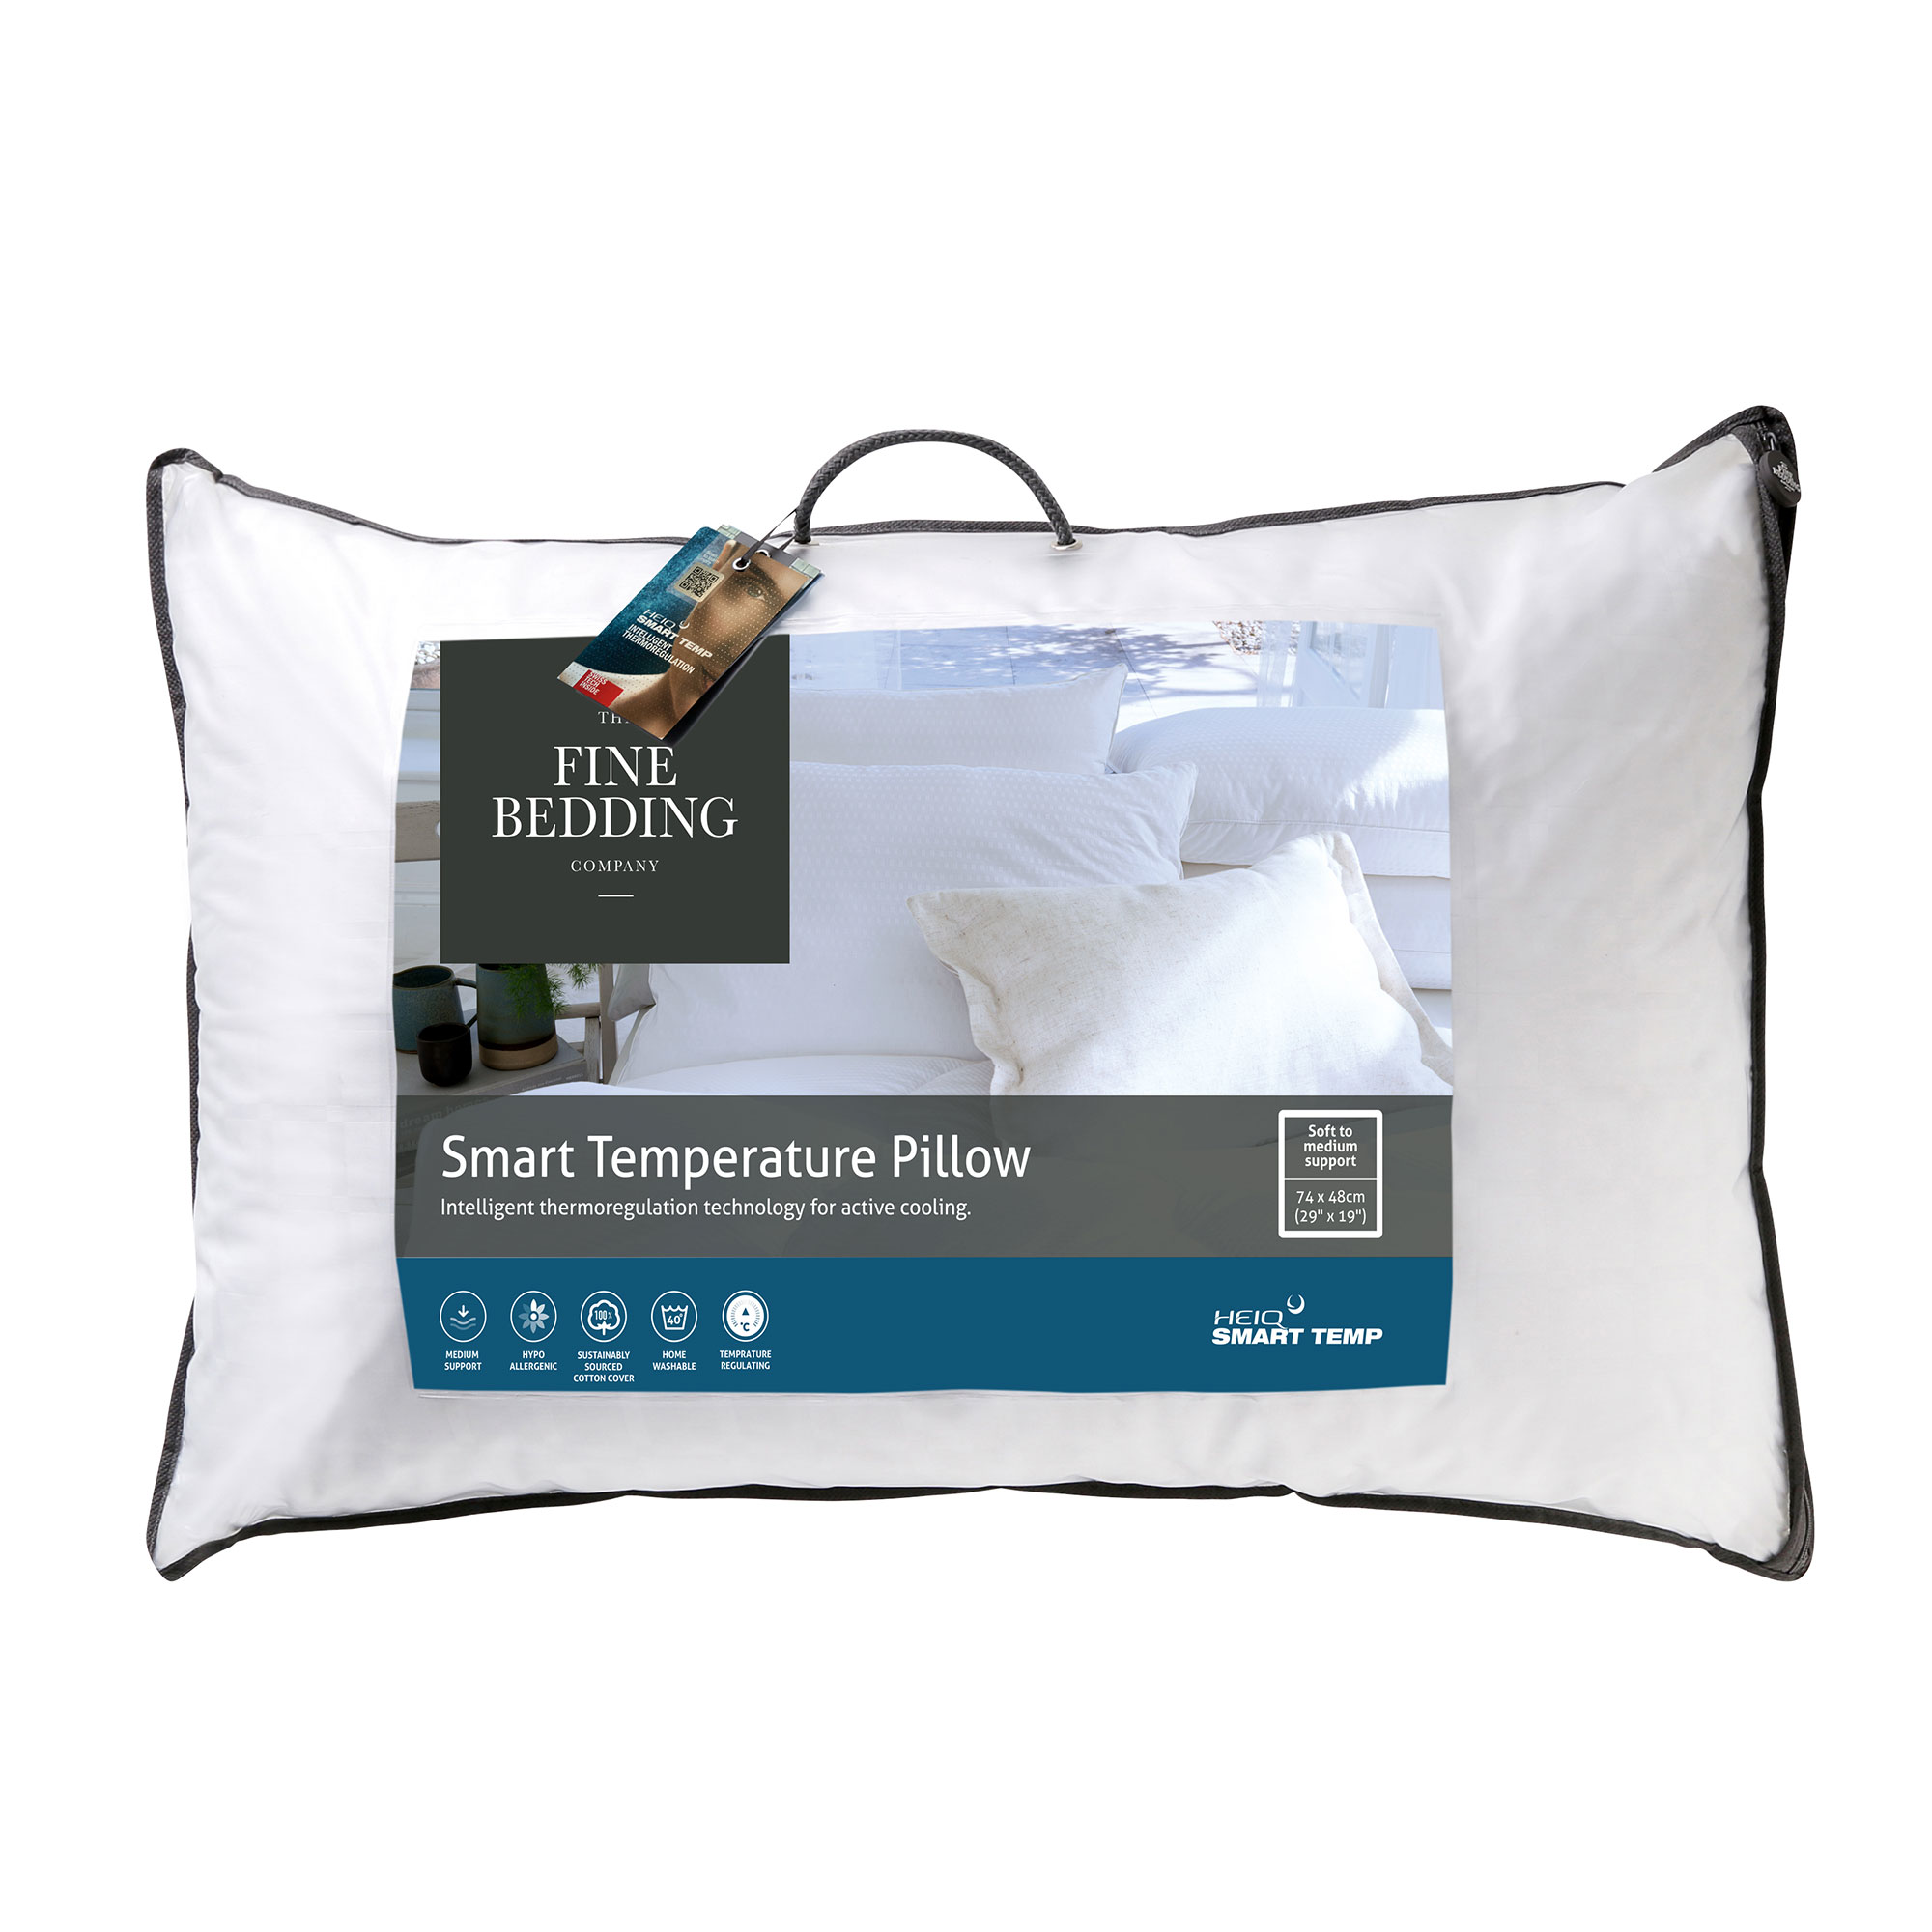 Smart Temperature Pillow - Pillows - Fishpools